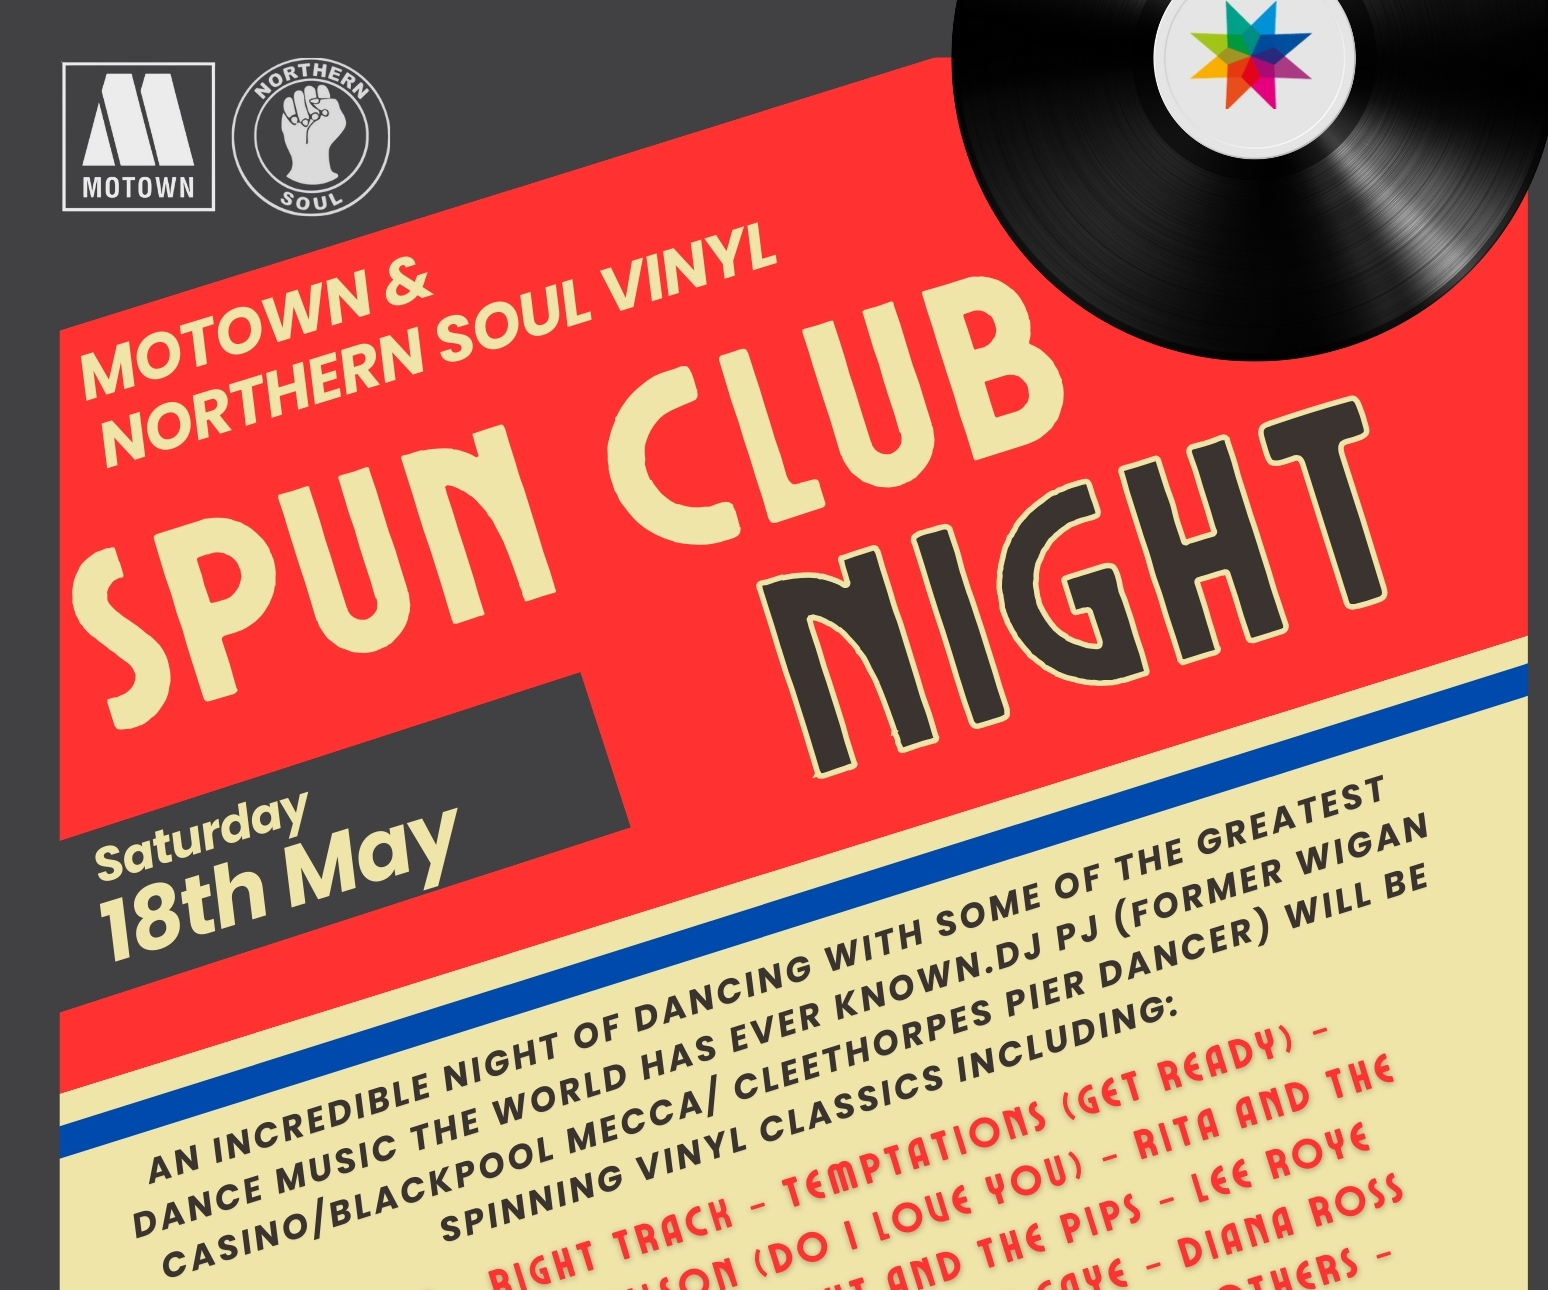 Motown and Northern Soul Vinyl Spun Club Night